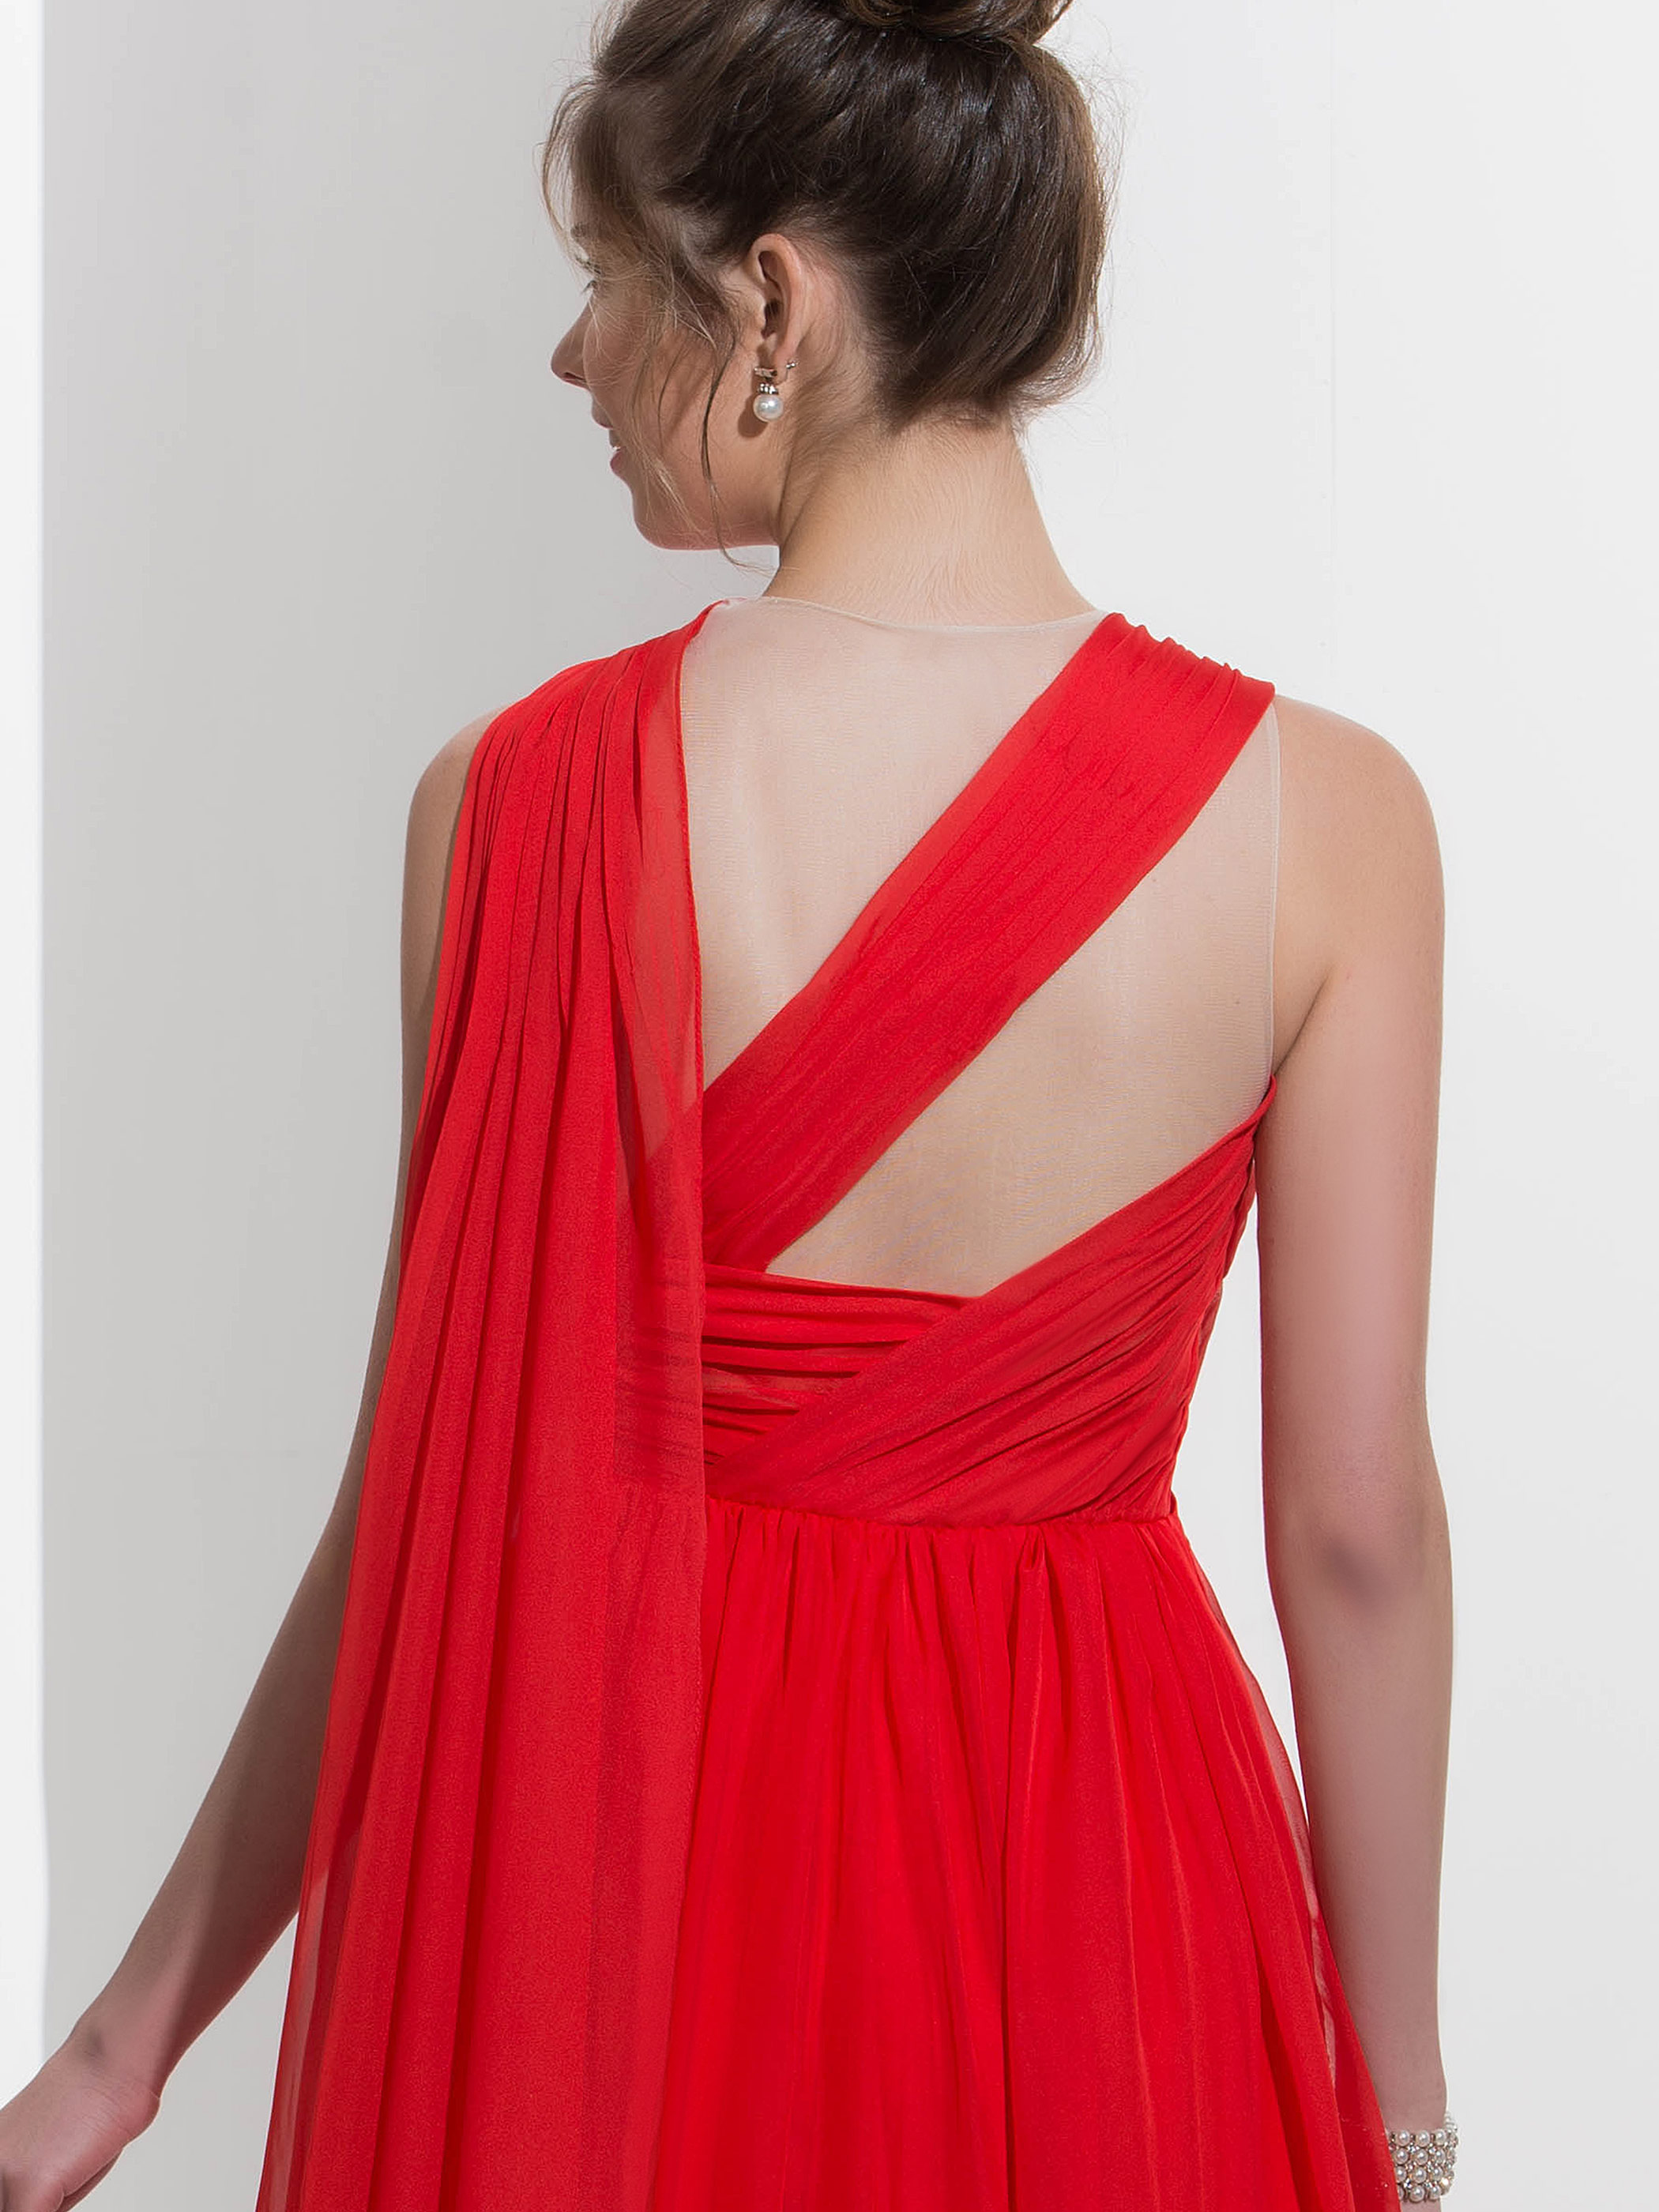 Watteau Floor-Length Sleeveless A-Line Prom Dress